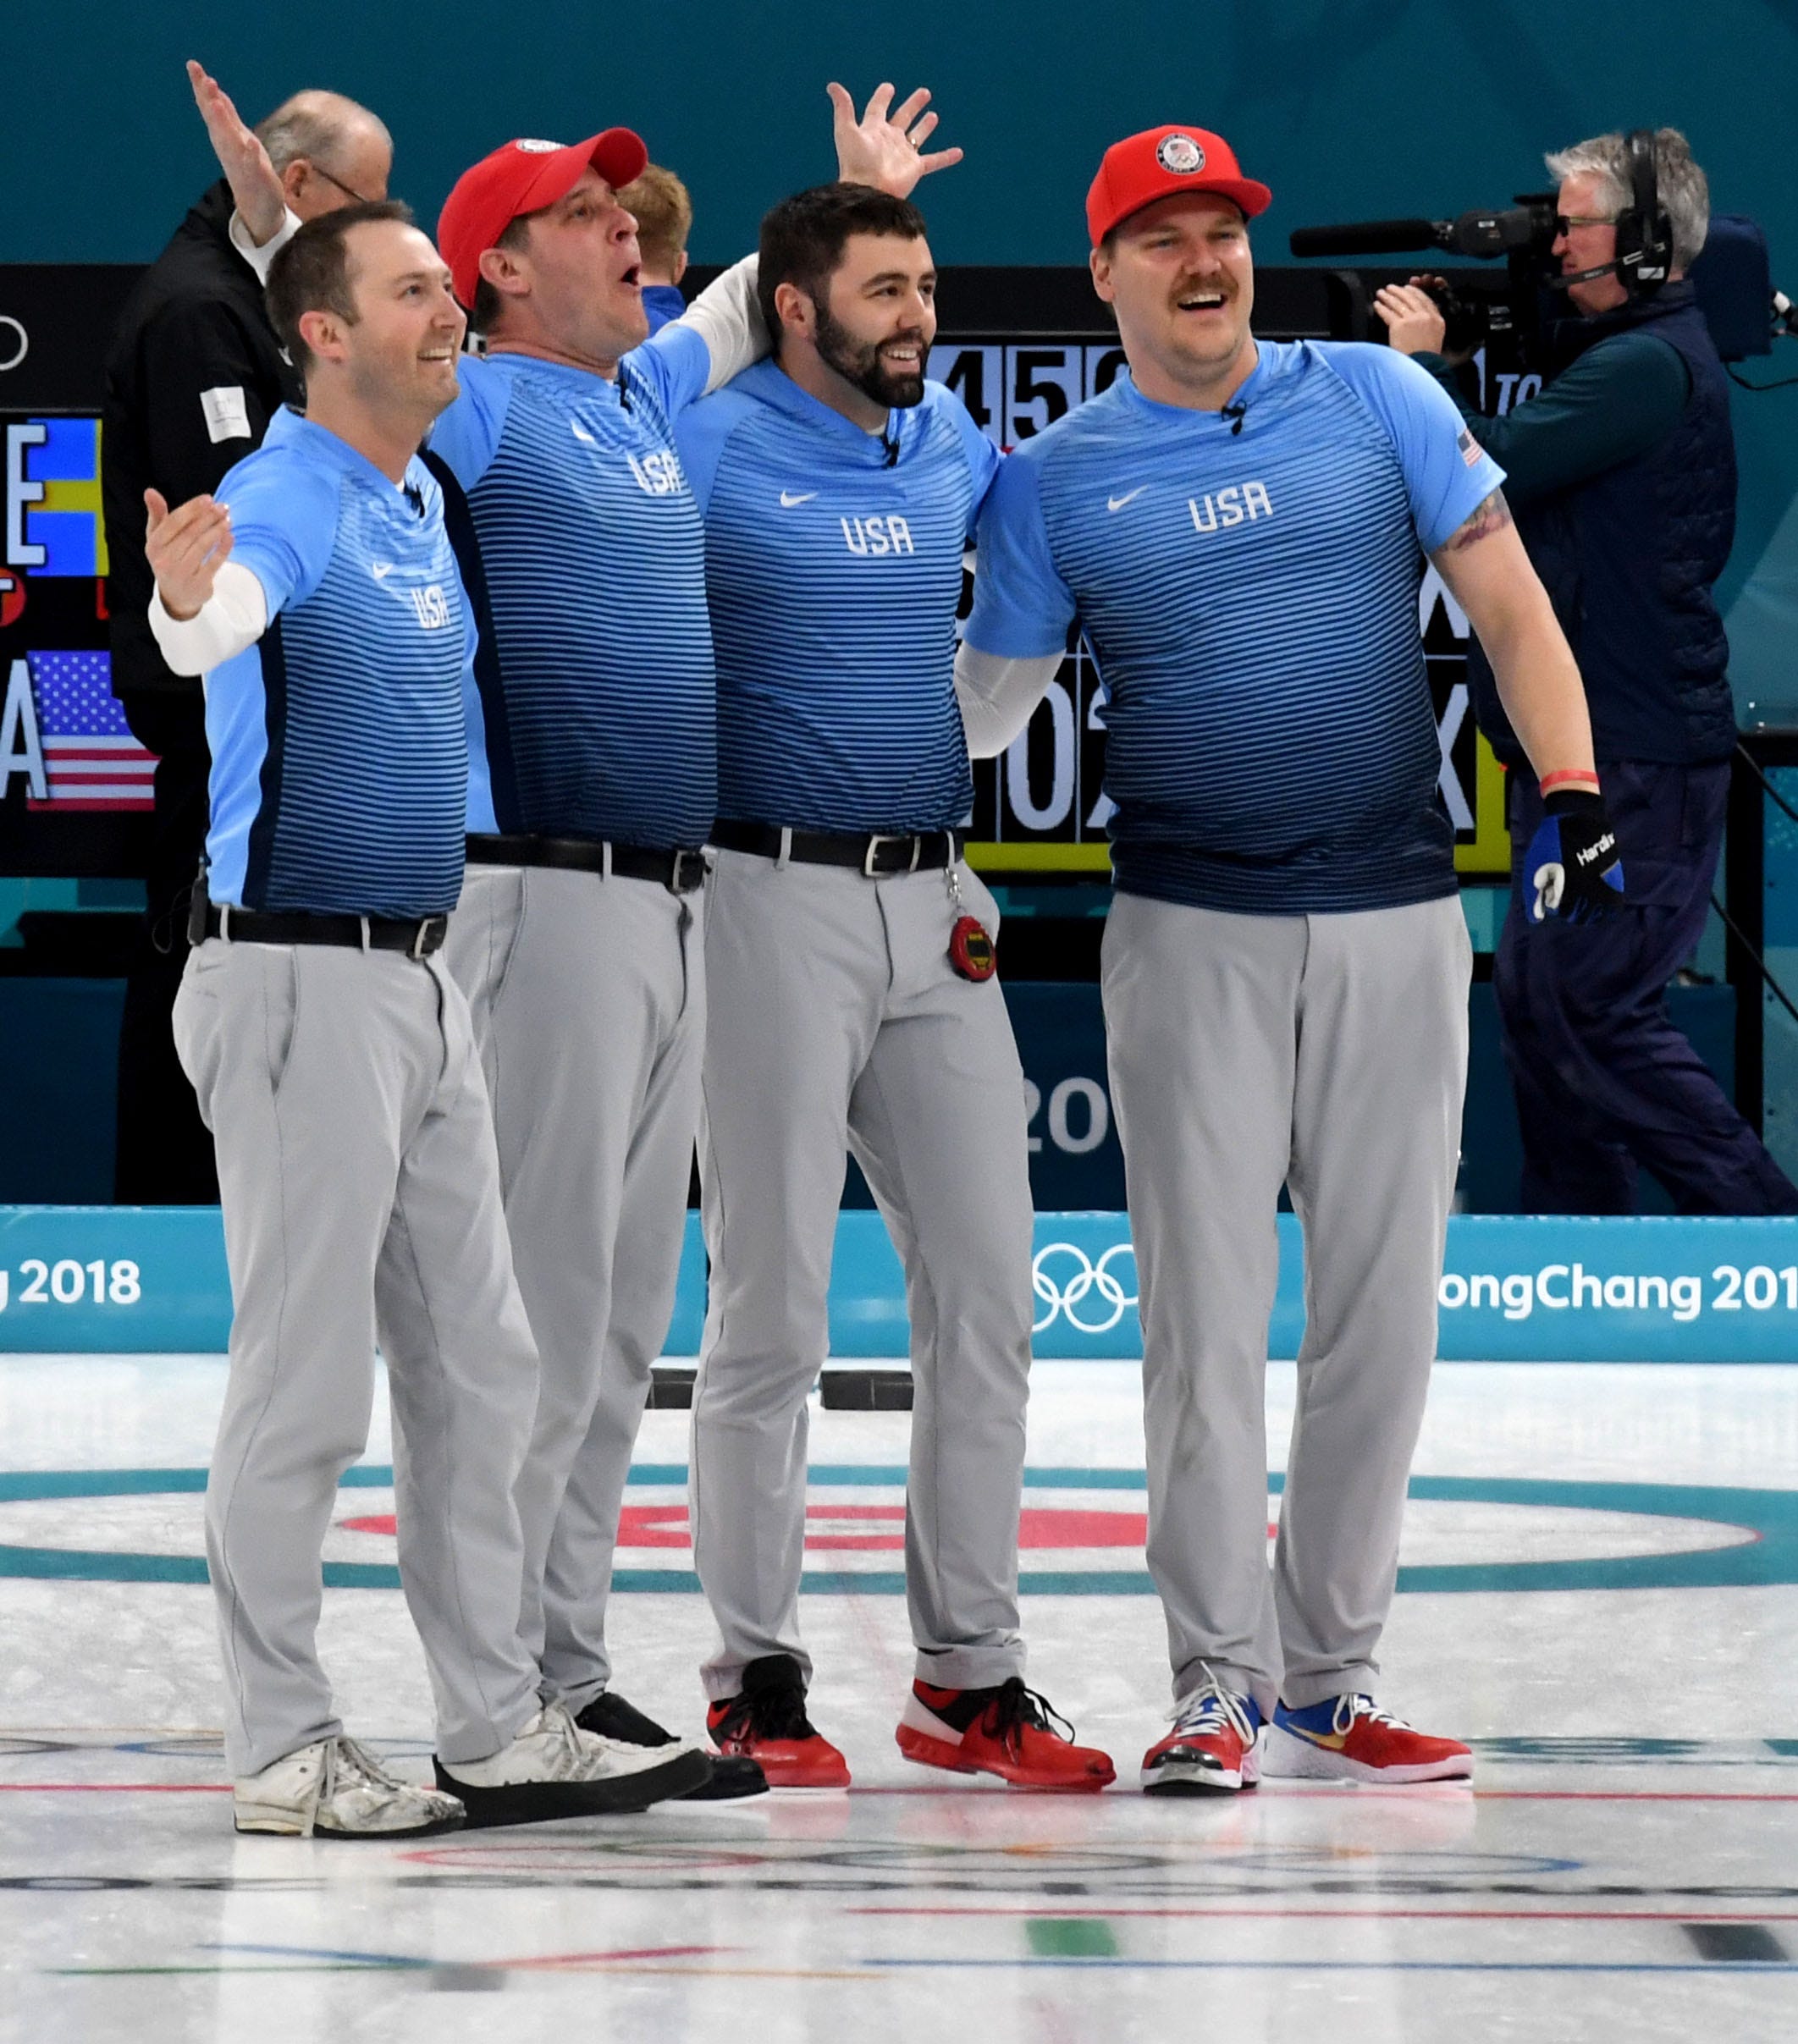 team usa curling jersey